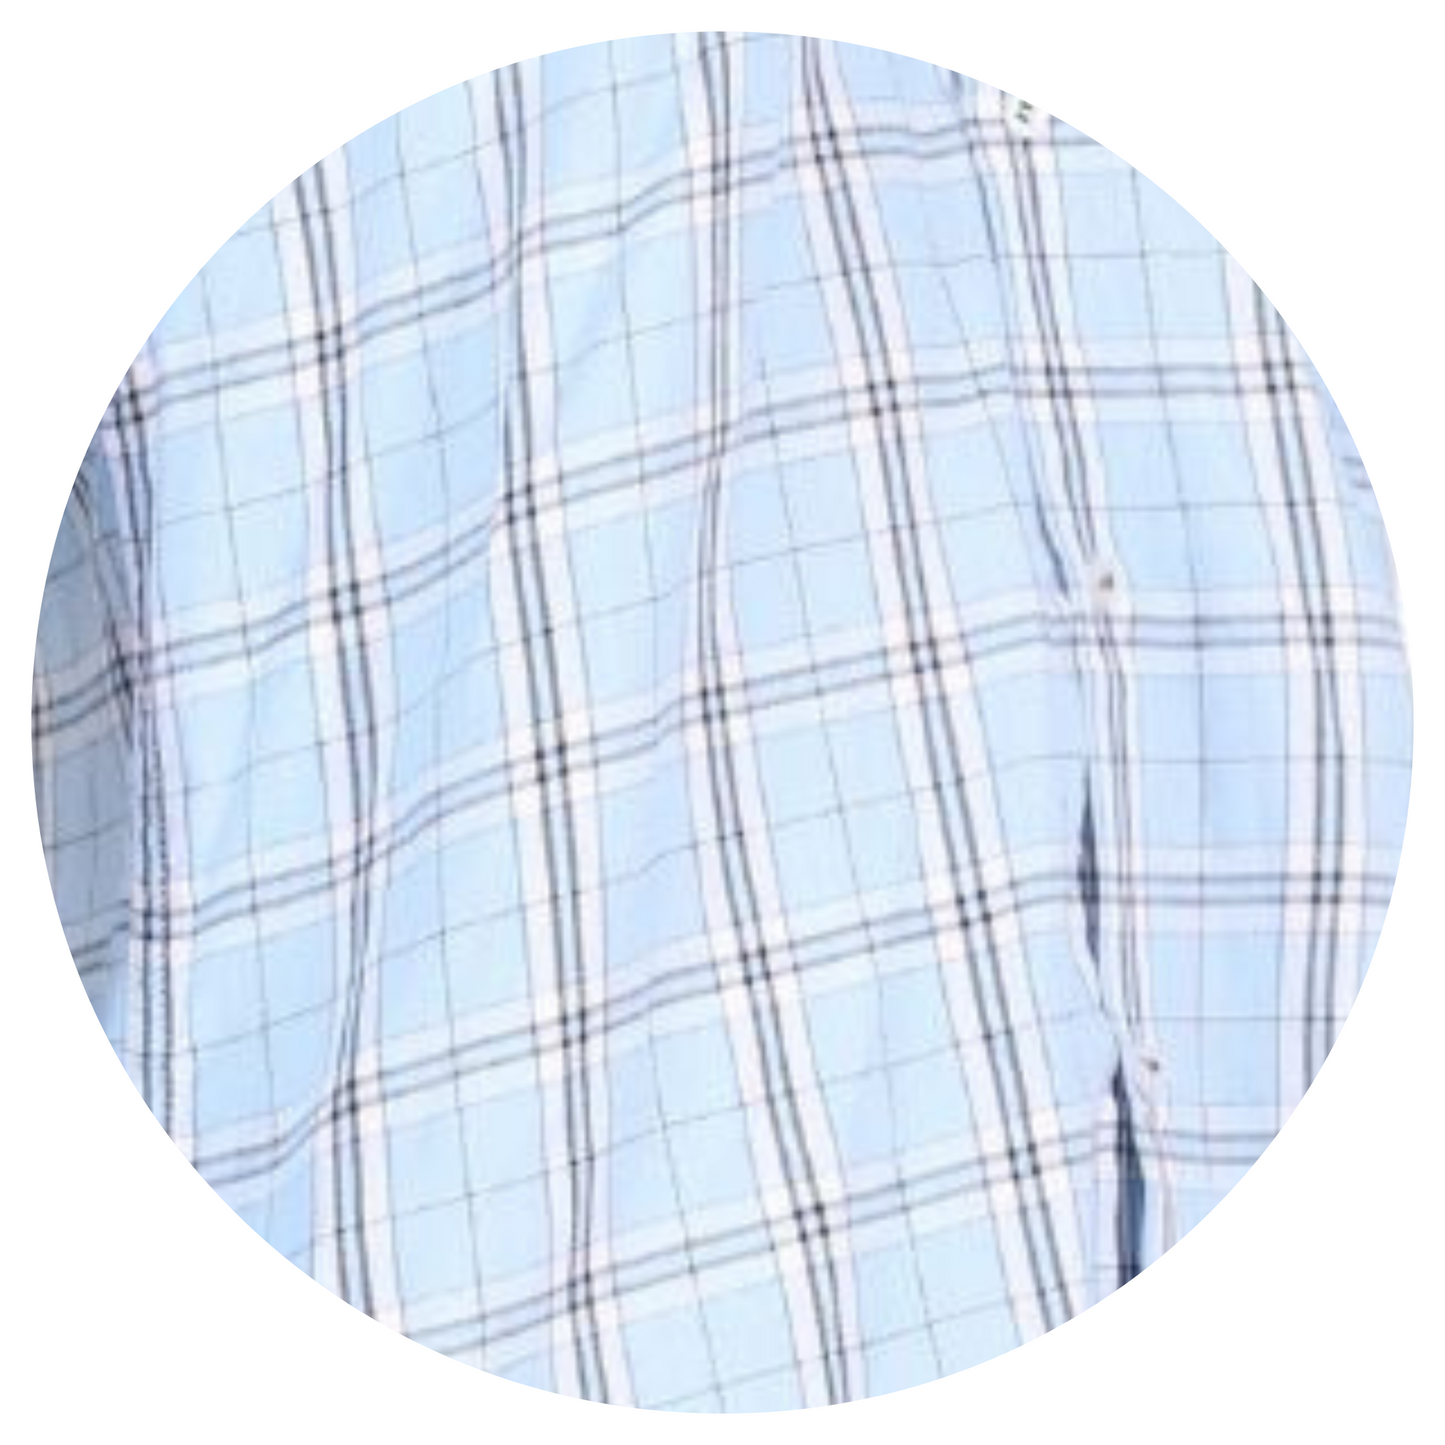 Blue Elegance: Printed Shirt with Classic Check Design | Men's Fashion